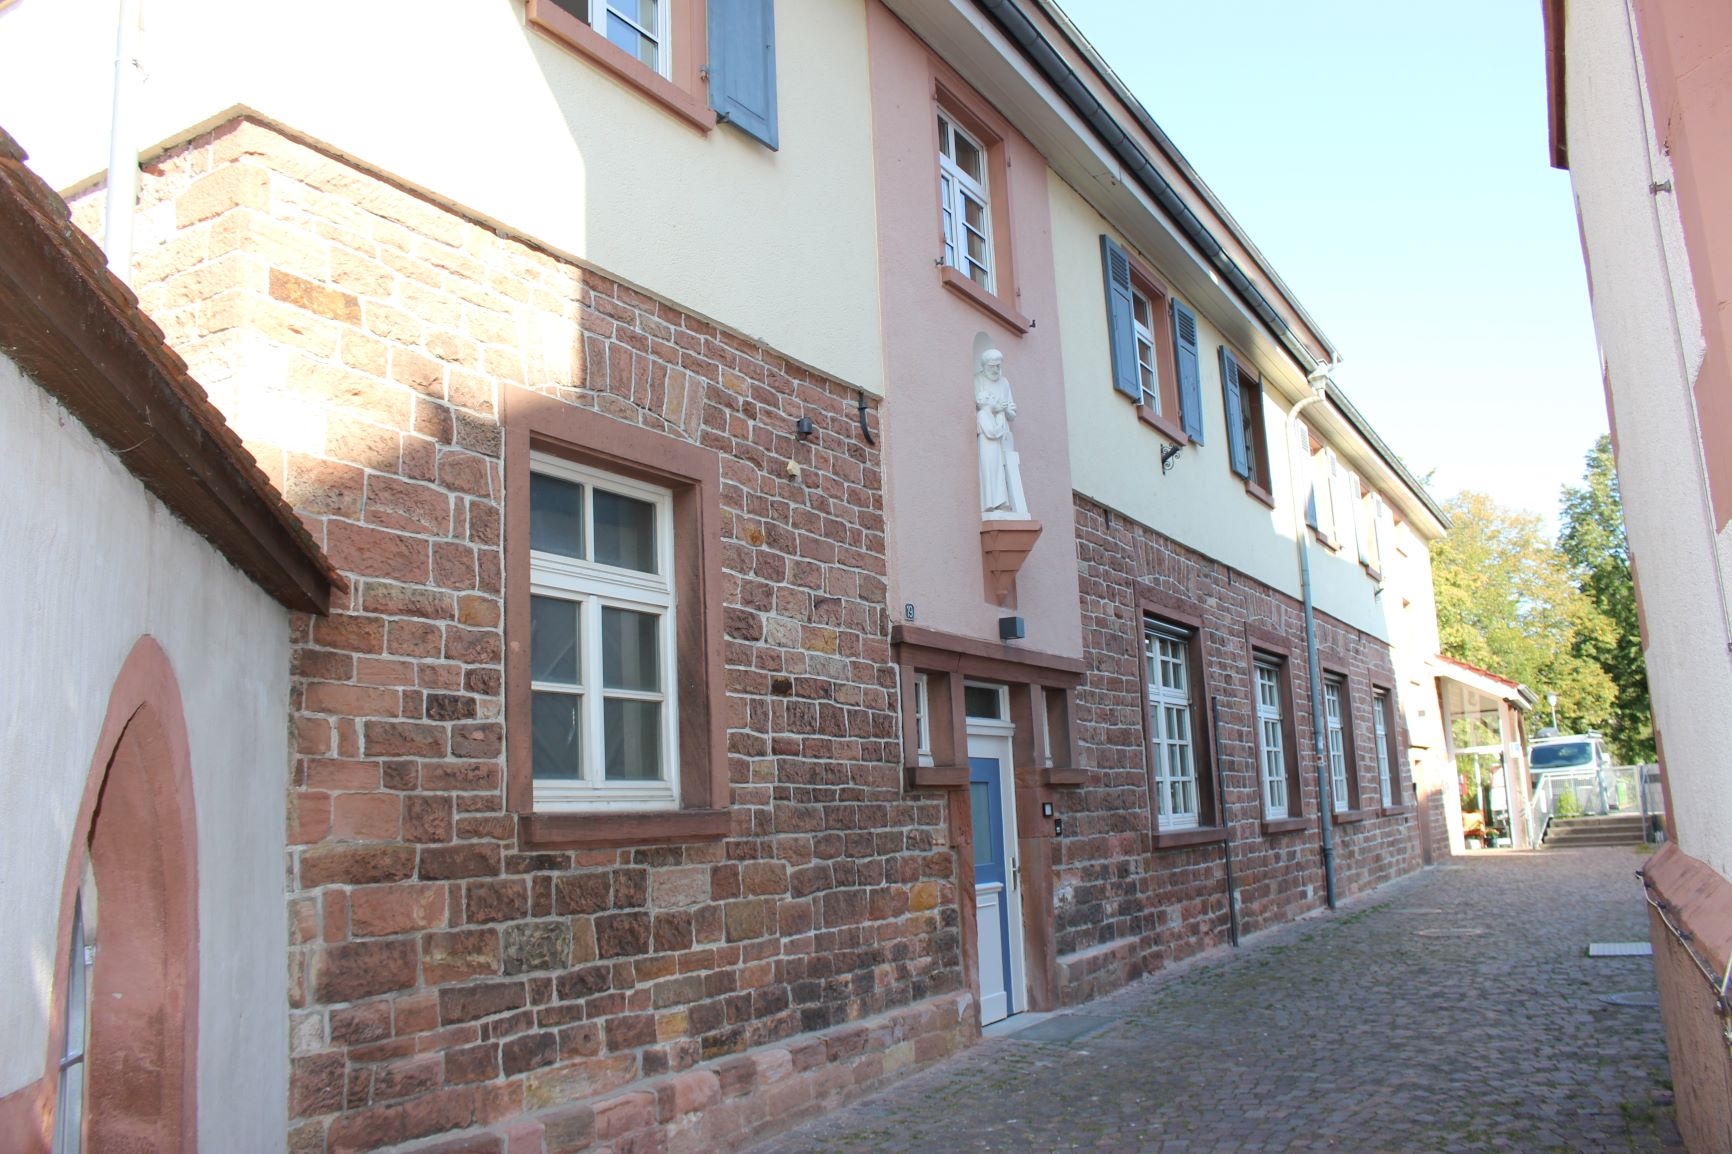 MuKi-Haus (Caritasverband Darmstadt e. V.)